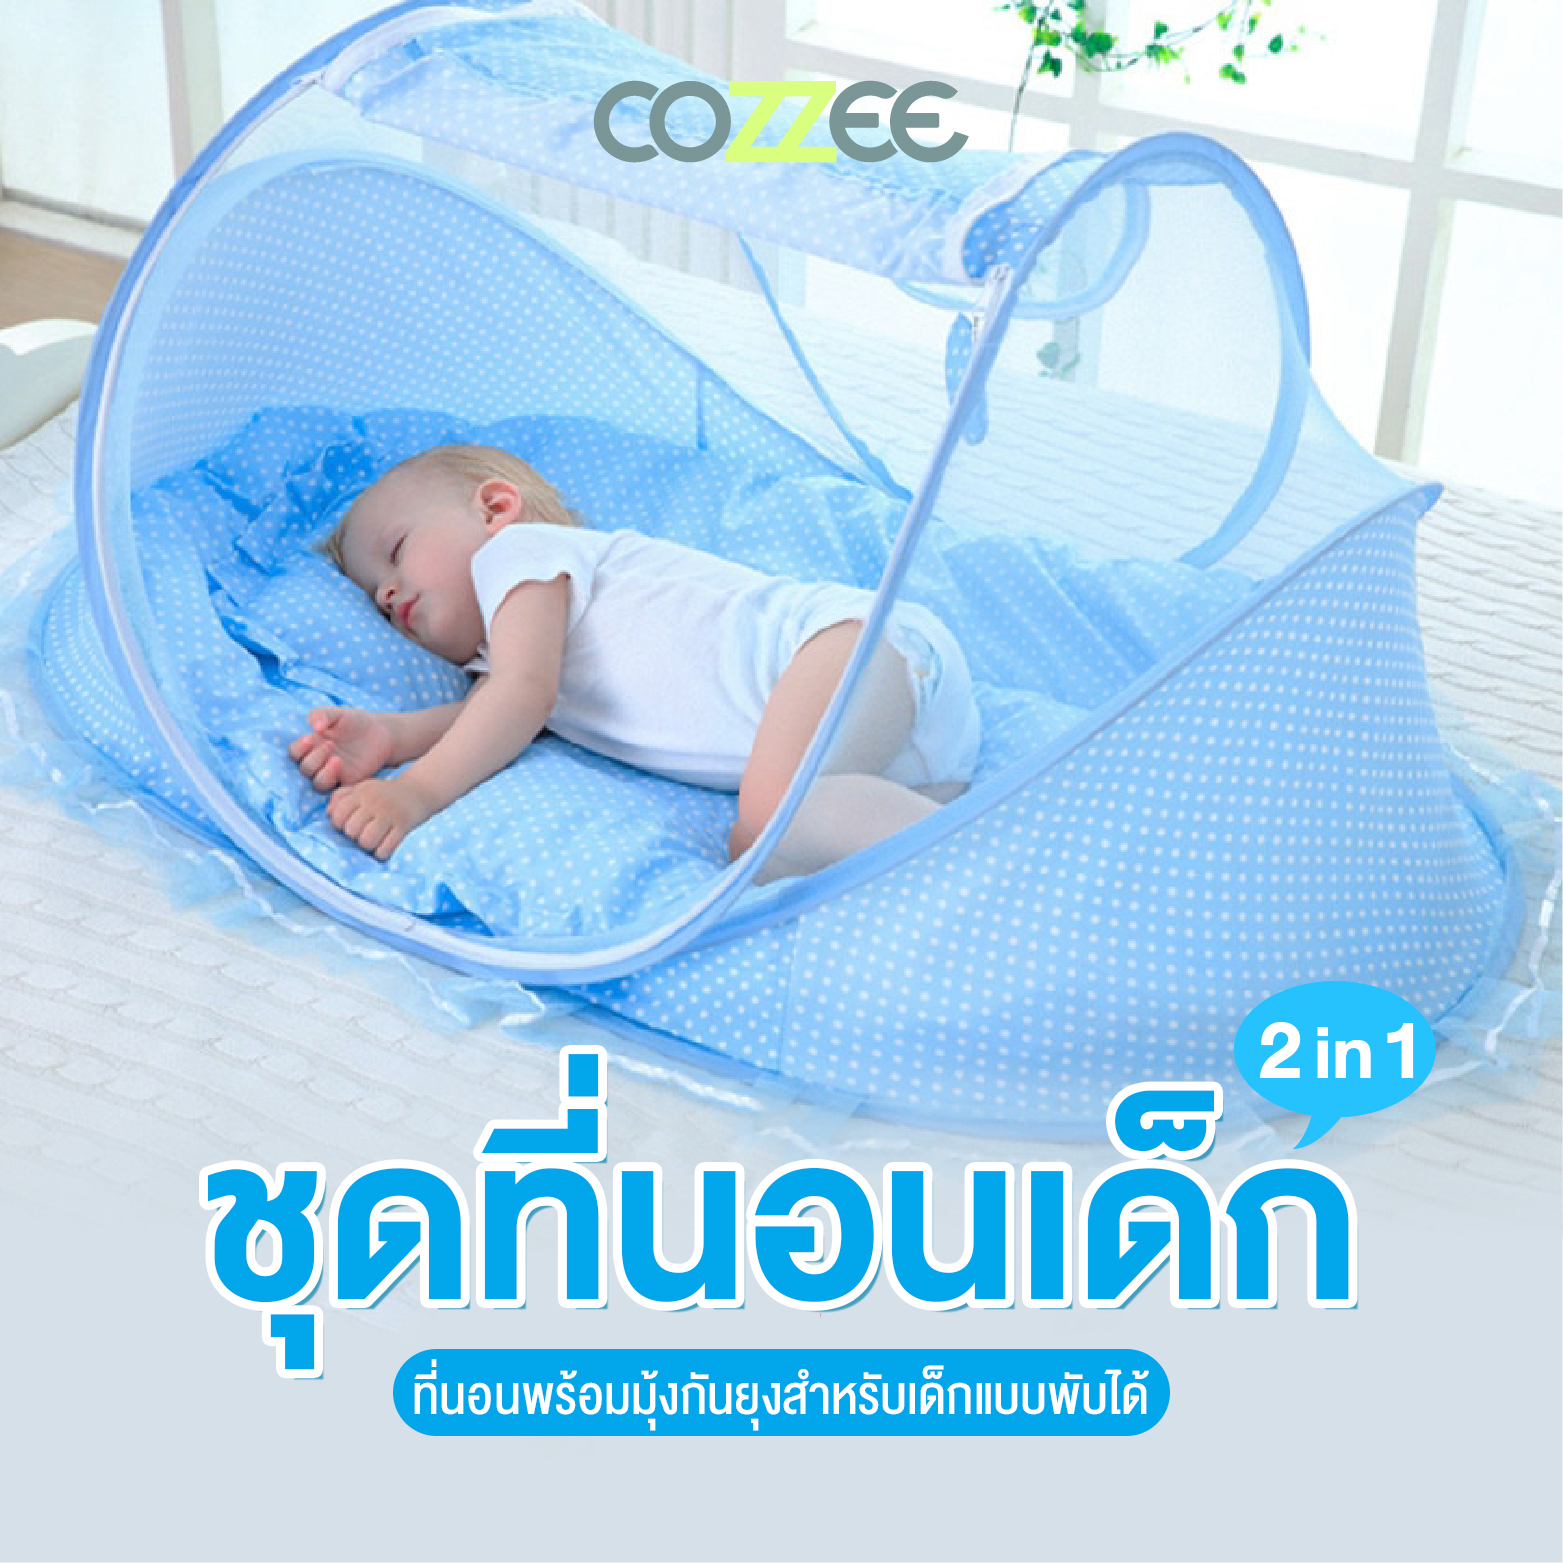 COZZEE ชุดที่นอนเด็ก 2 in 1 Happy Baby  มุ้งครอบเด็ก ที่นอนเด็กพร้อมมุ้งกันยุง รุ่น BEDDING/BLUE